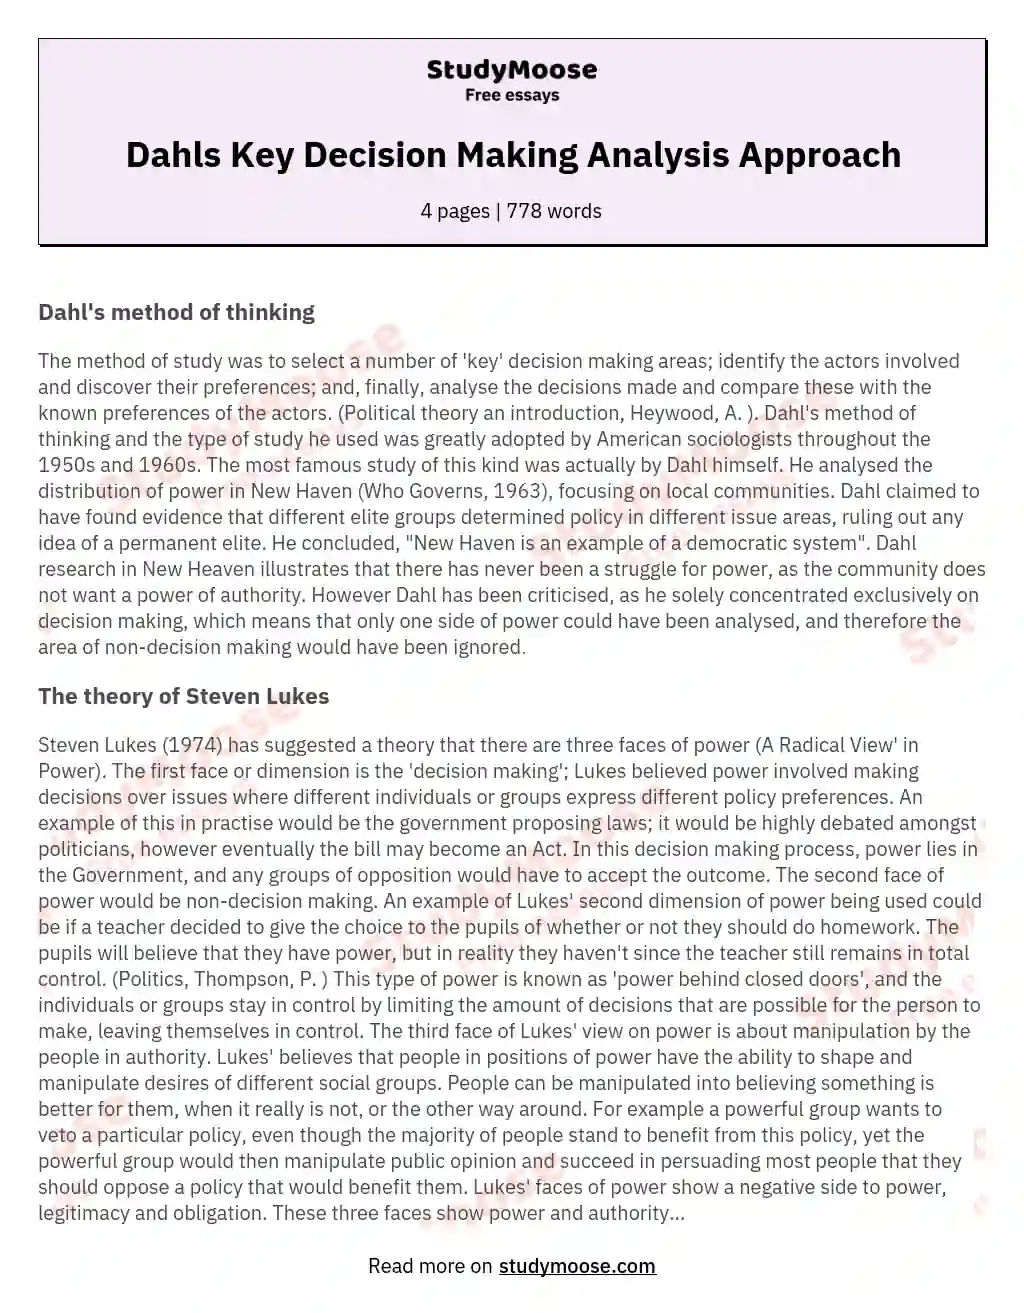 Dahls Key Decision Making Analysis Approach essay